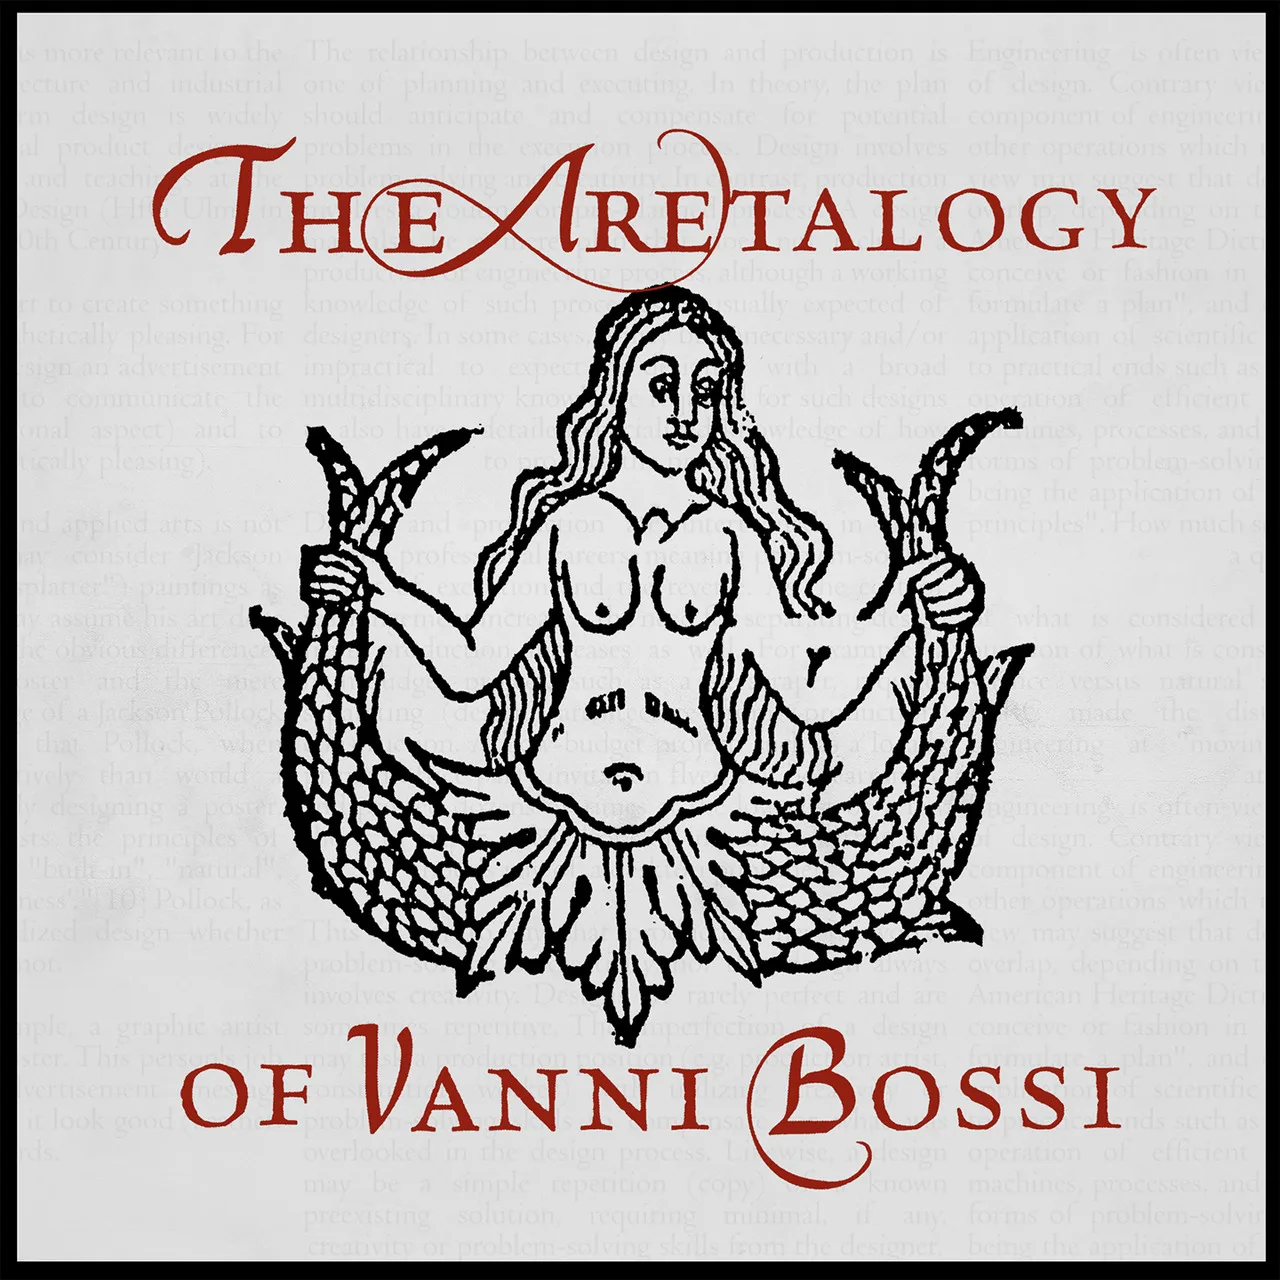 

The Aretalogy of Vanni Bossi by Stephen Minch-magic tricks